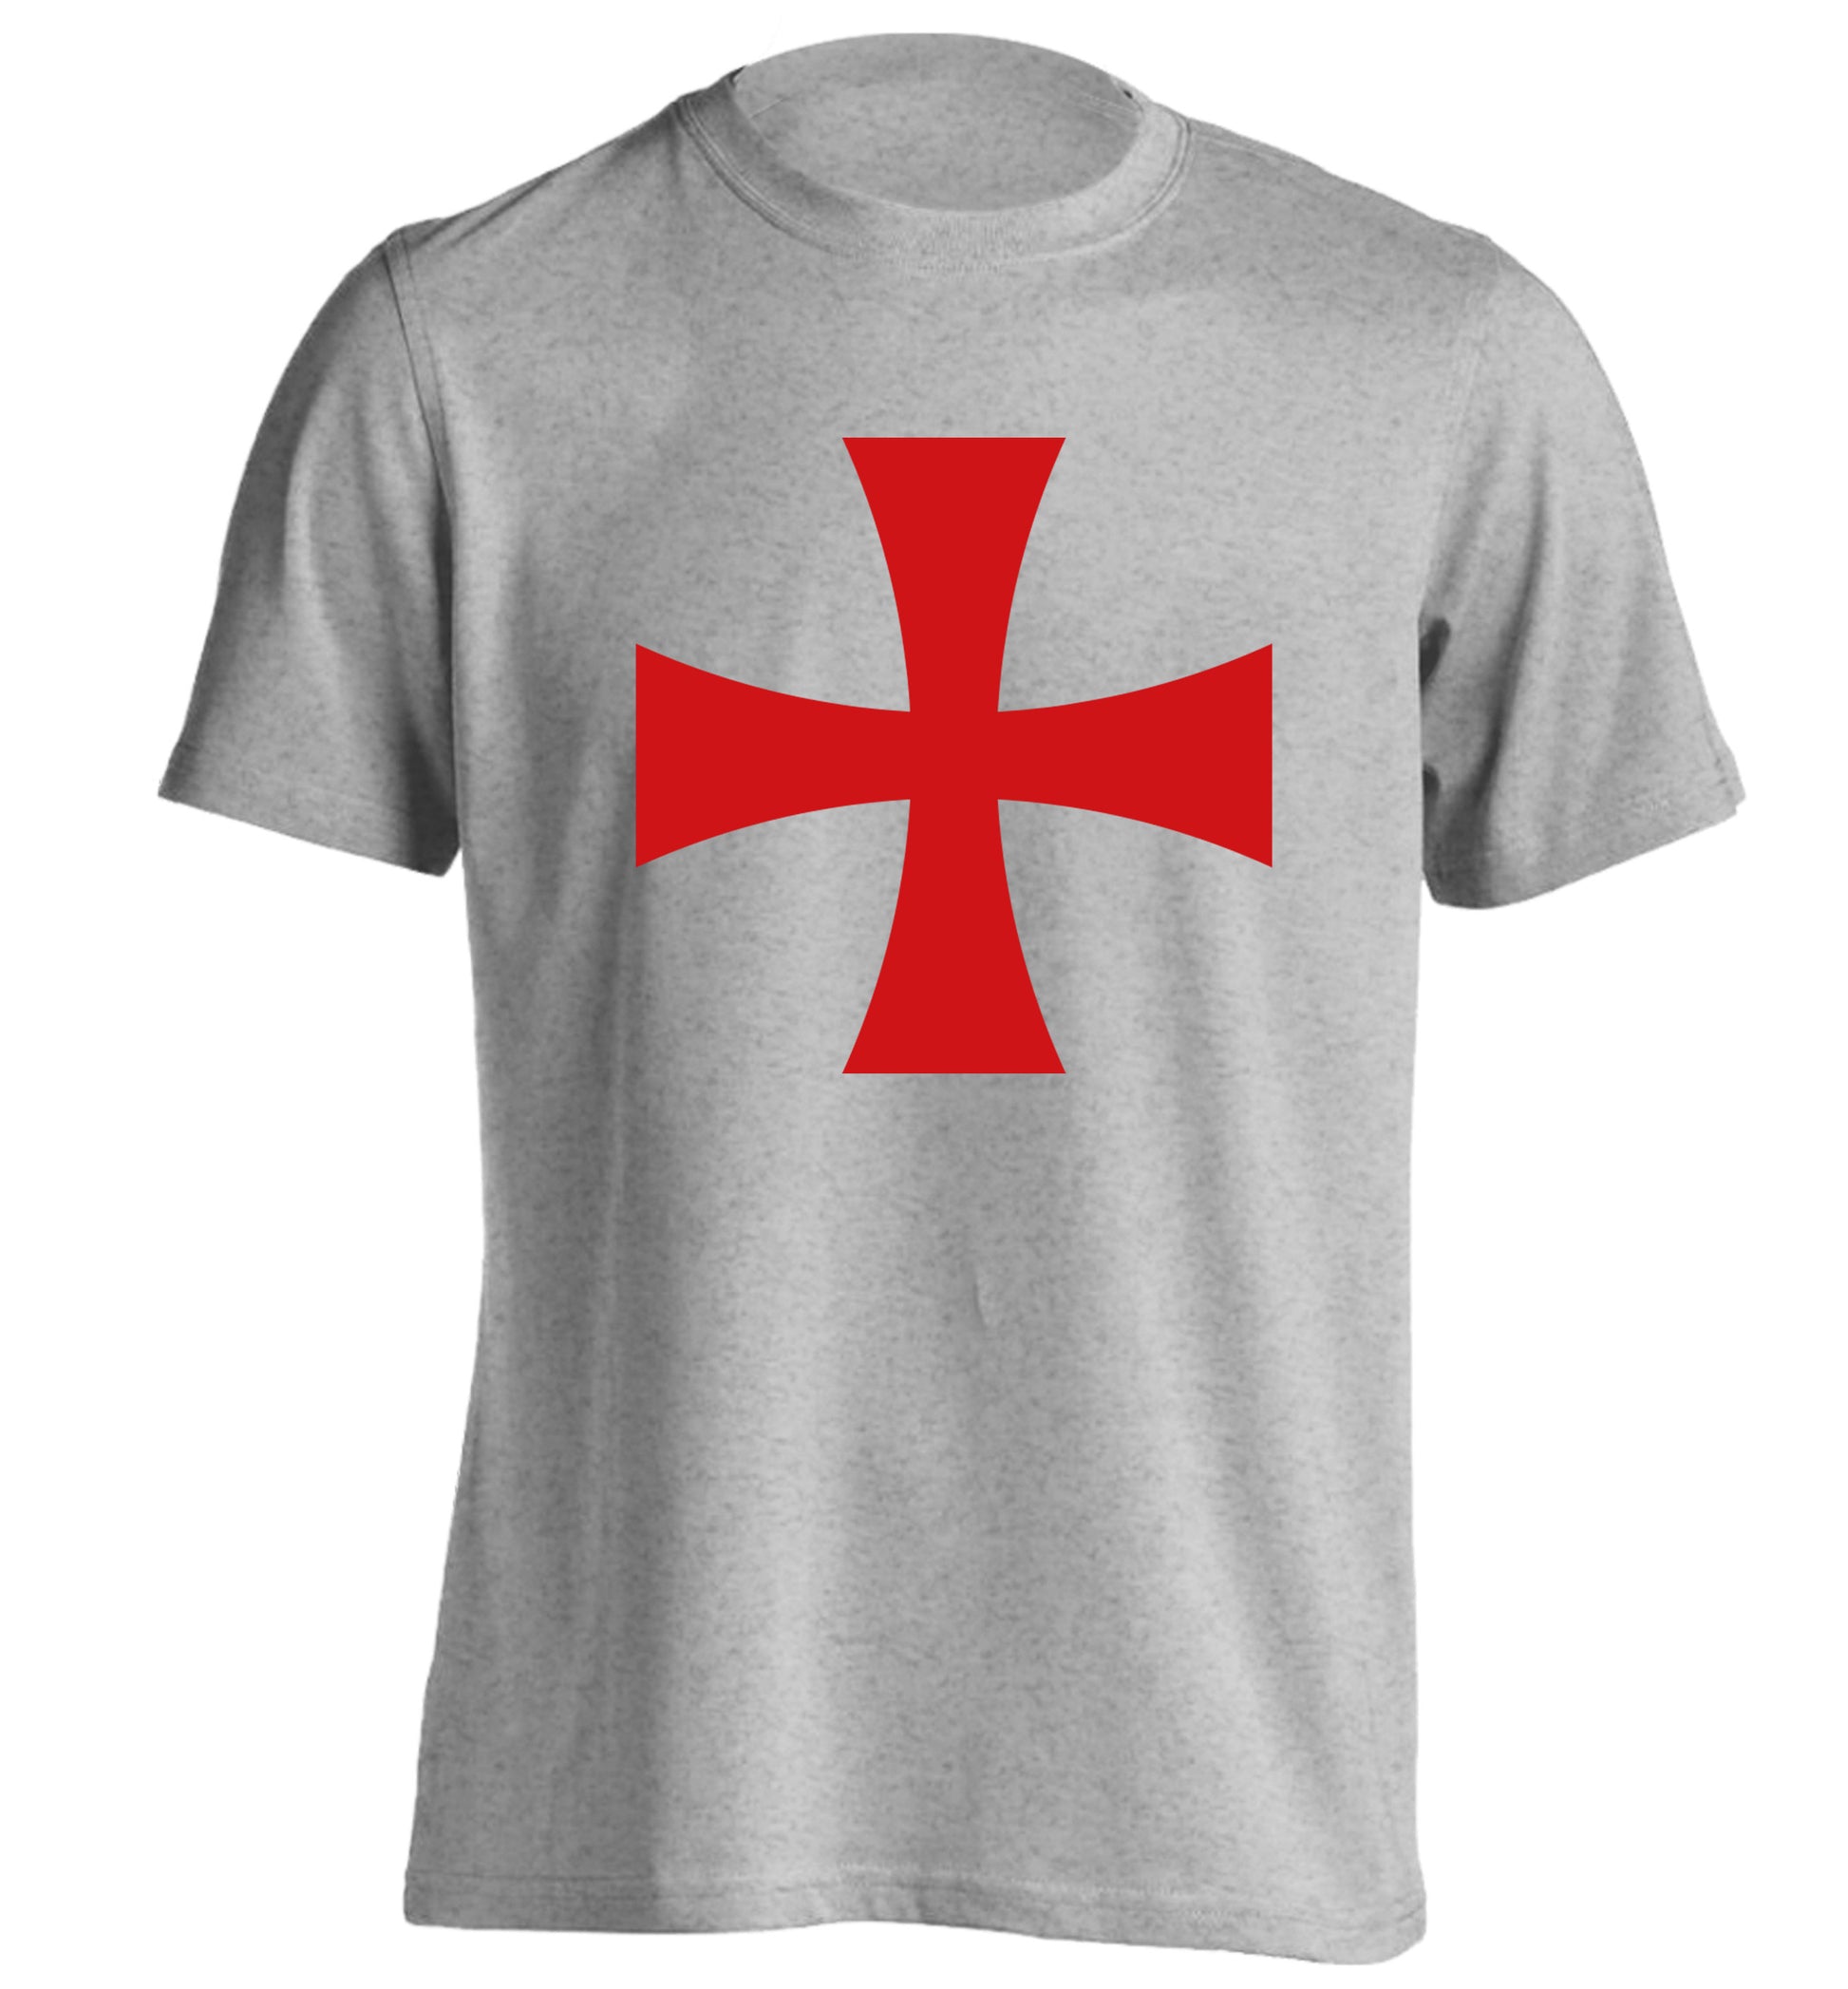 Knights Templar cross adults unisex grey Tshirt 2XL